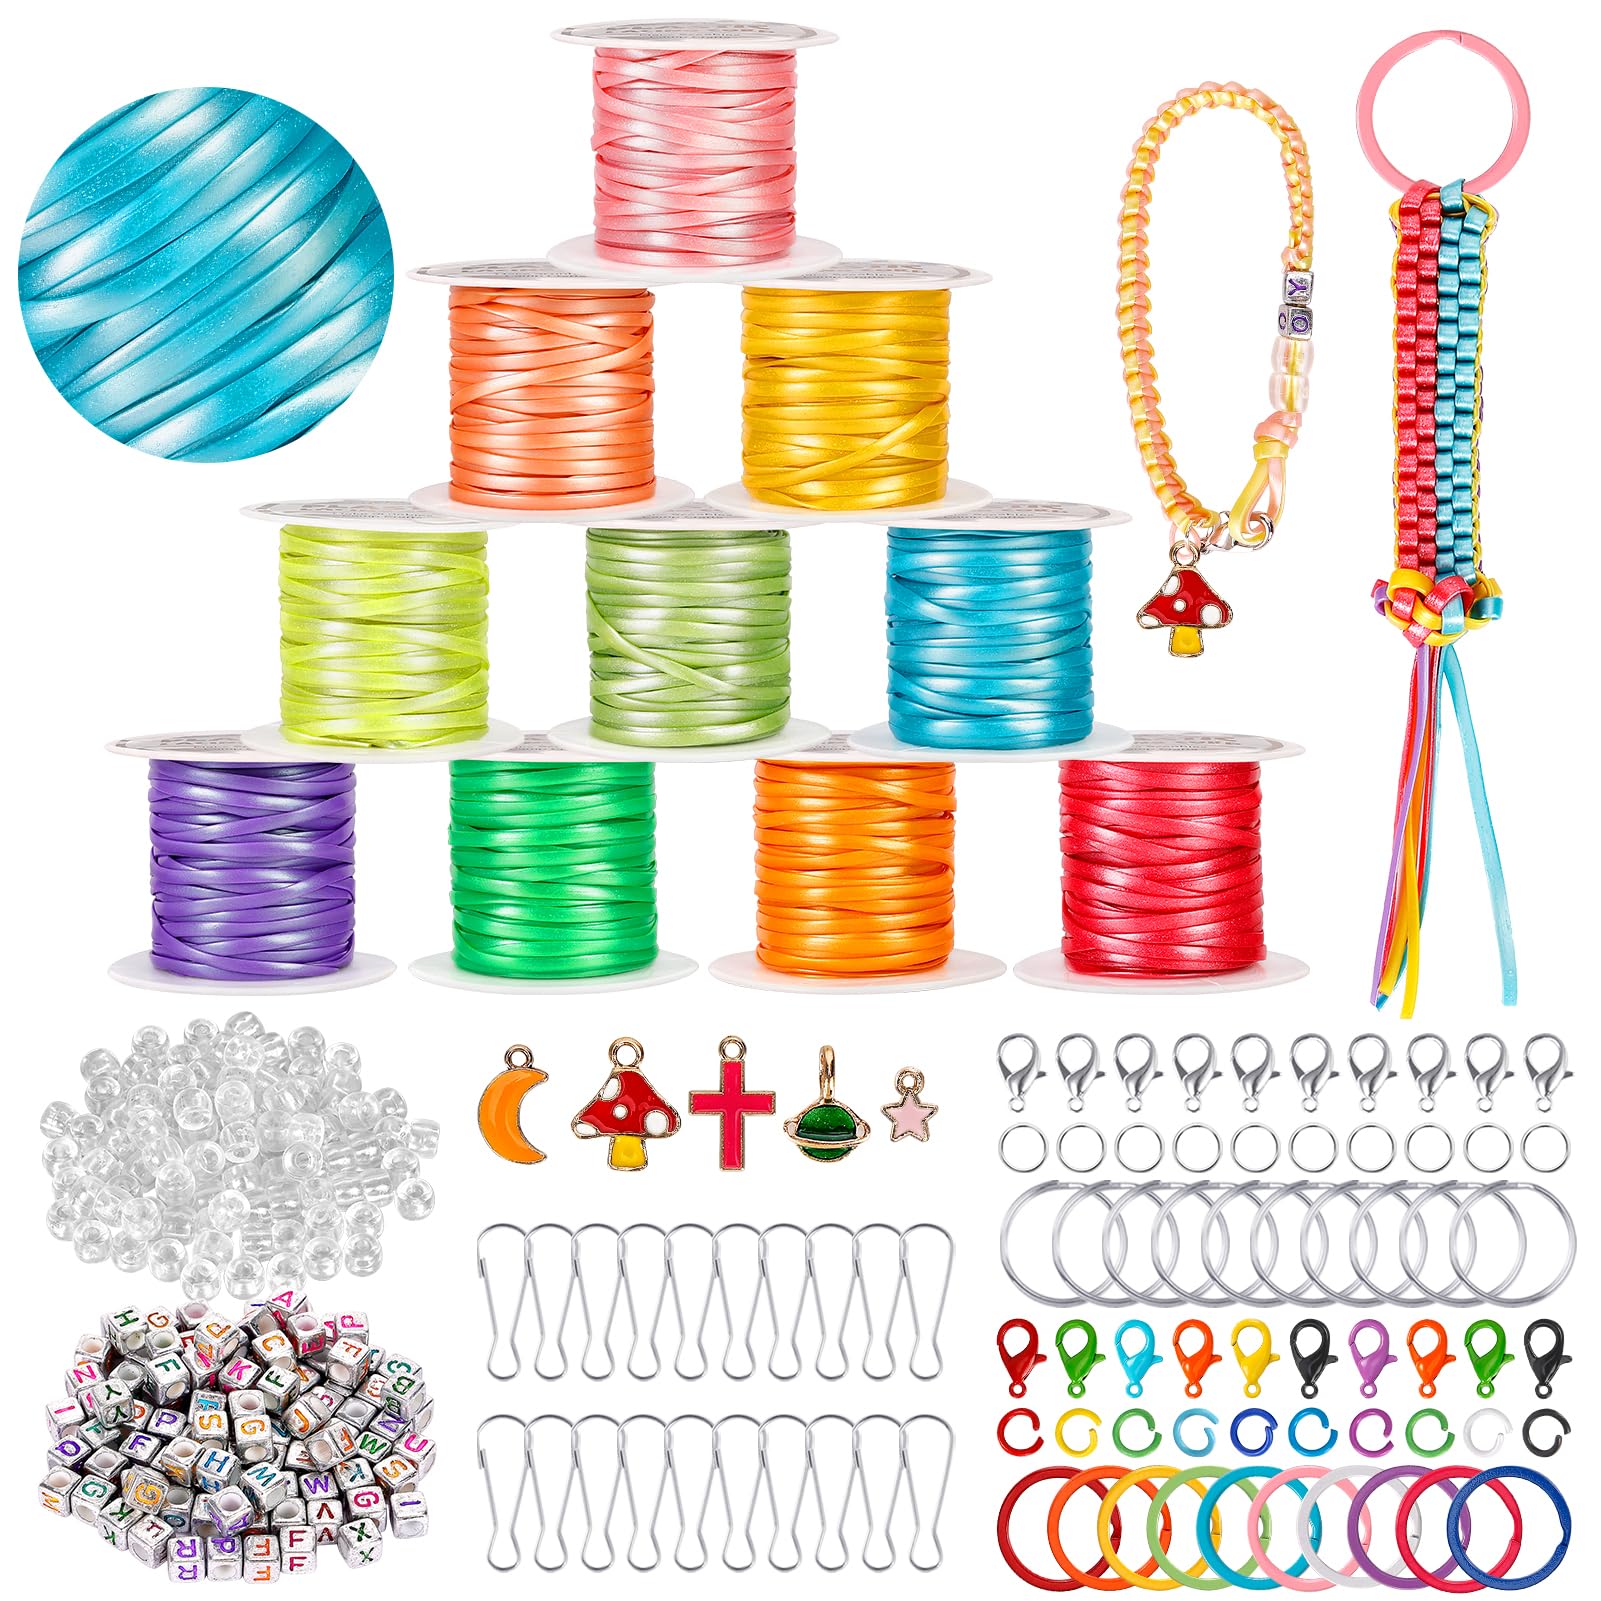 Silk Beading Thread Cord Spool Choose Sizes 00, A B C D E F and Color